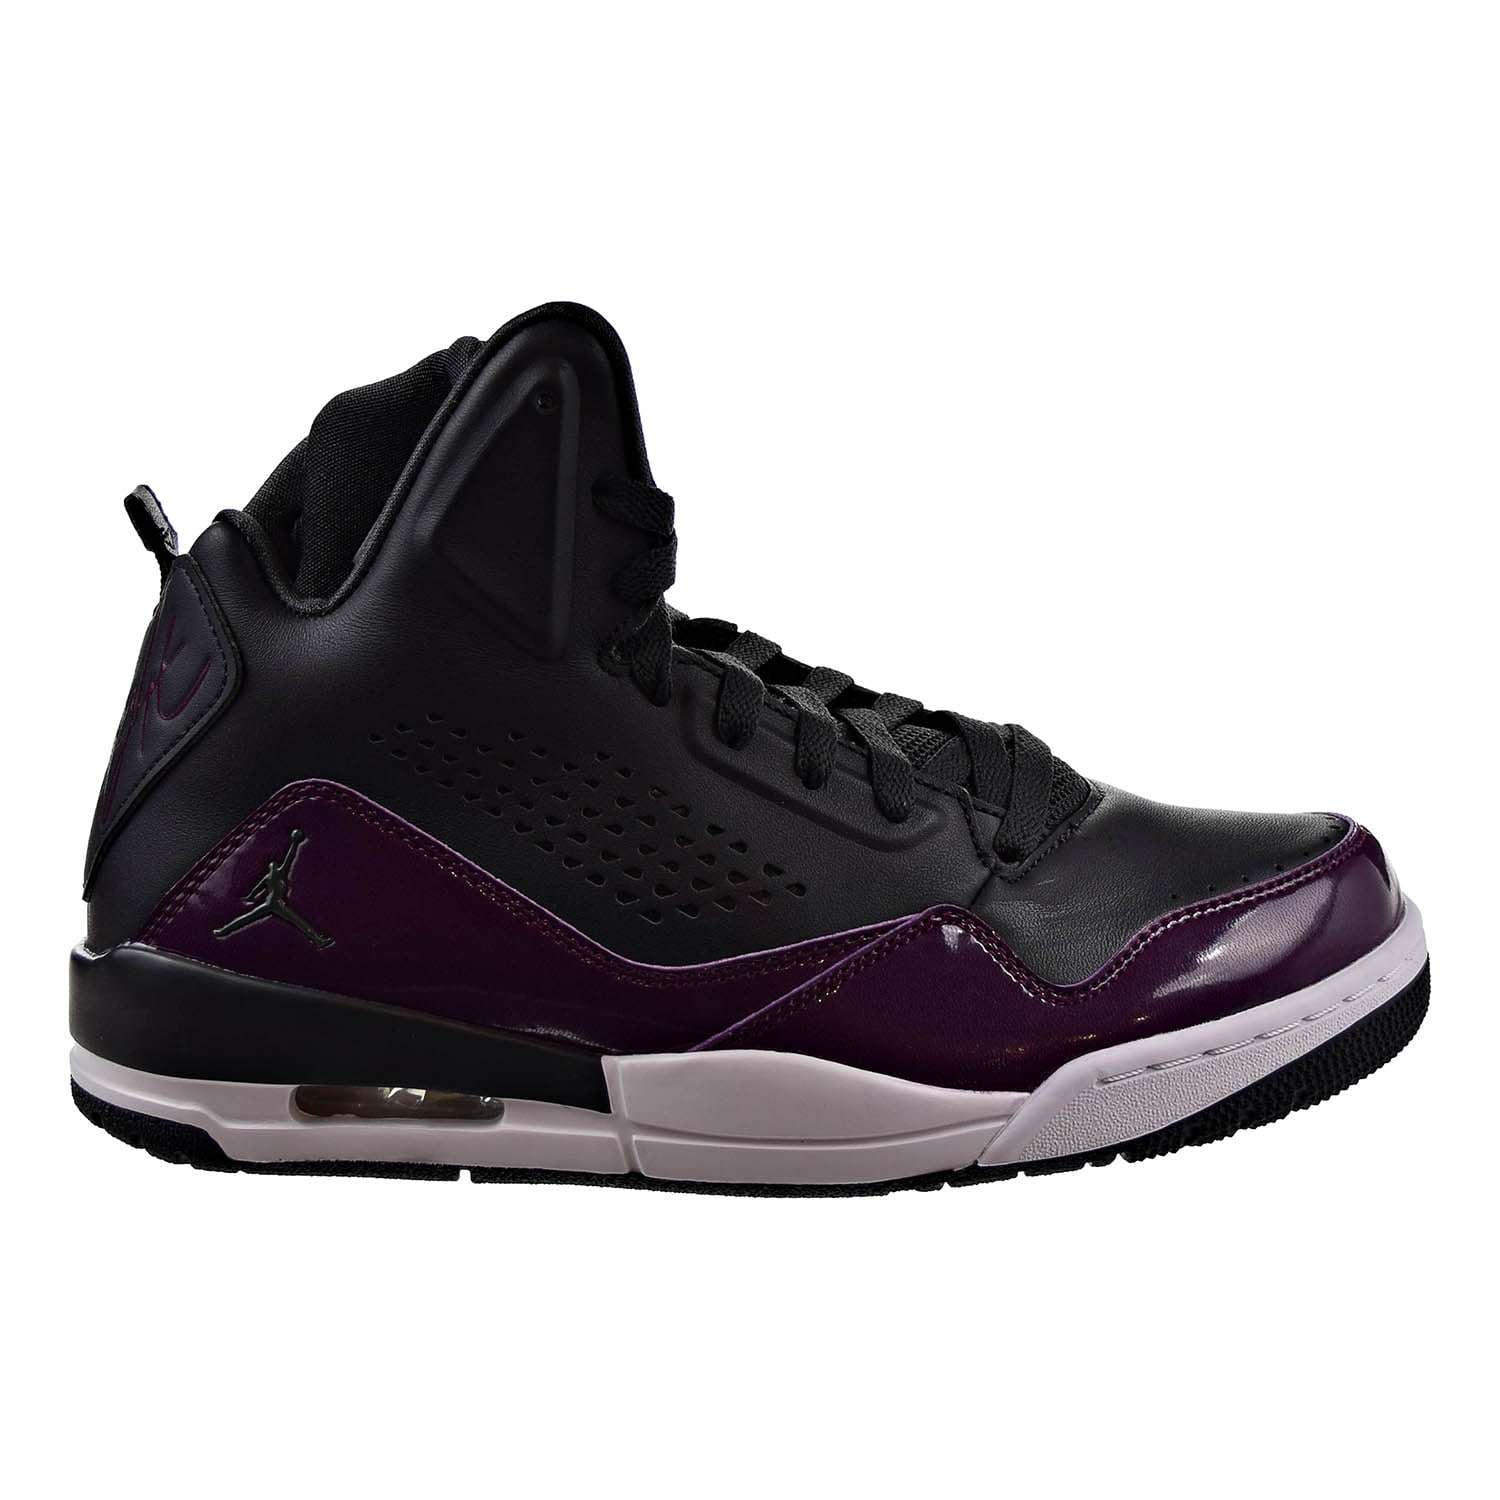 Basketball Men\'s Anthracite/Anthracite-Bordeaux Shoes 629877-022 SC-3 Jordan